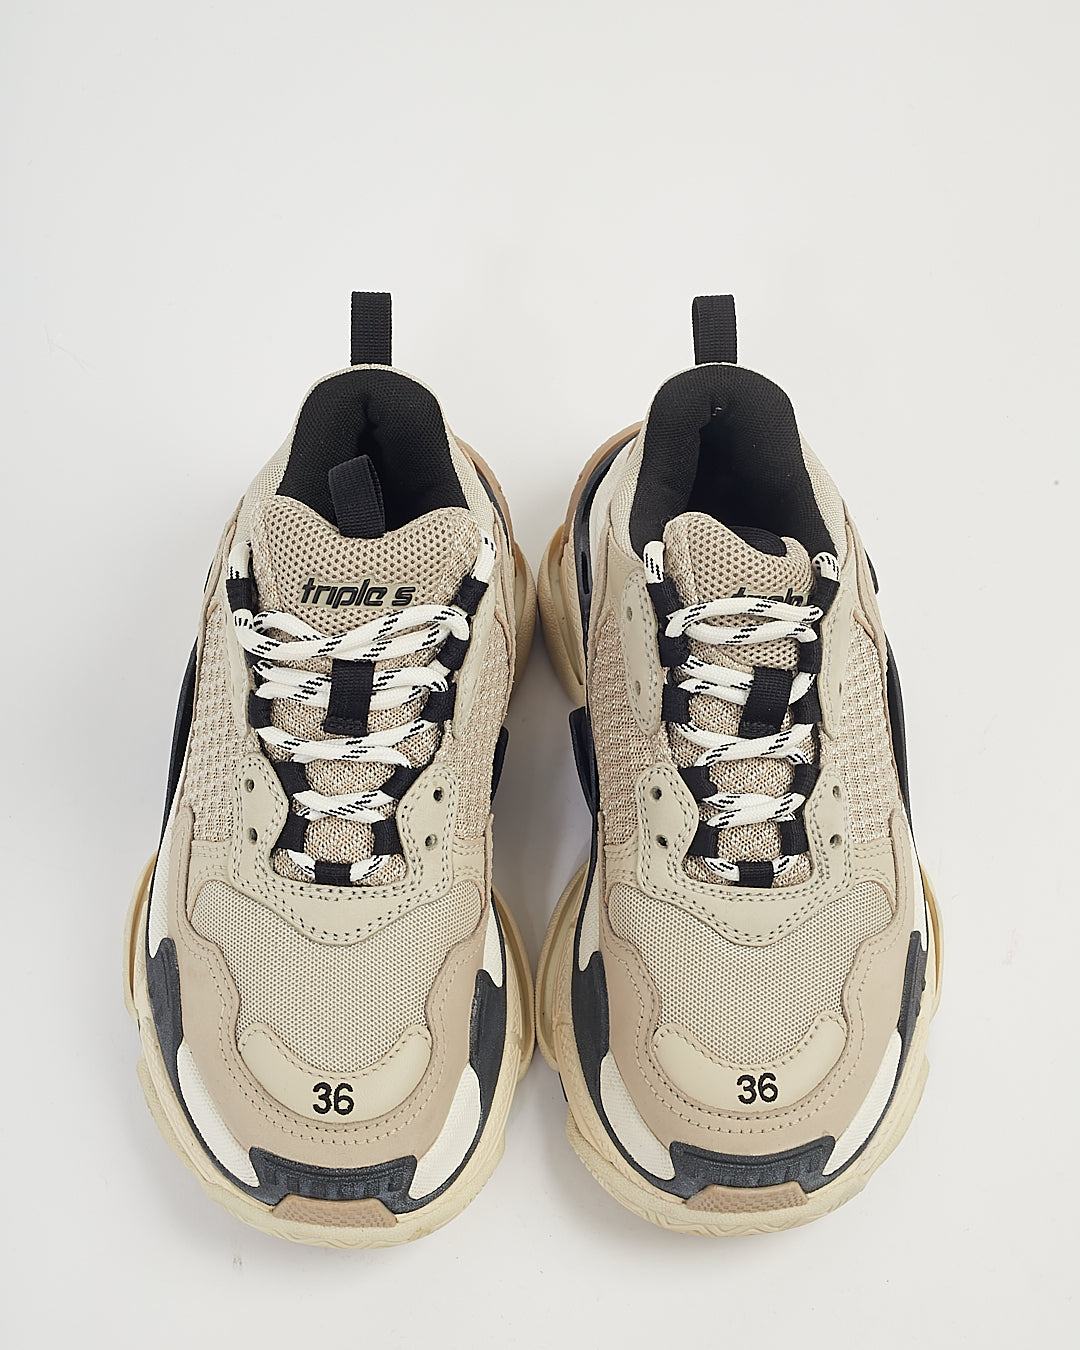 Balenciaga Beige/Black Leather & Fabric Triple S Sneakers - 36